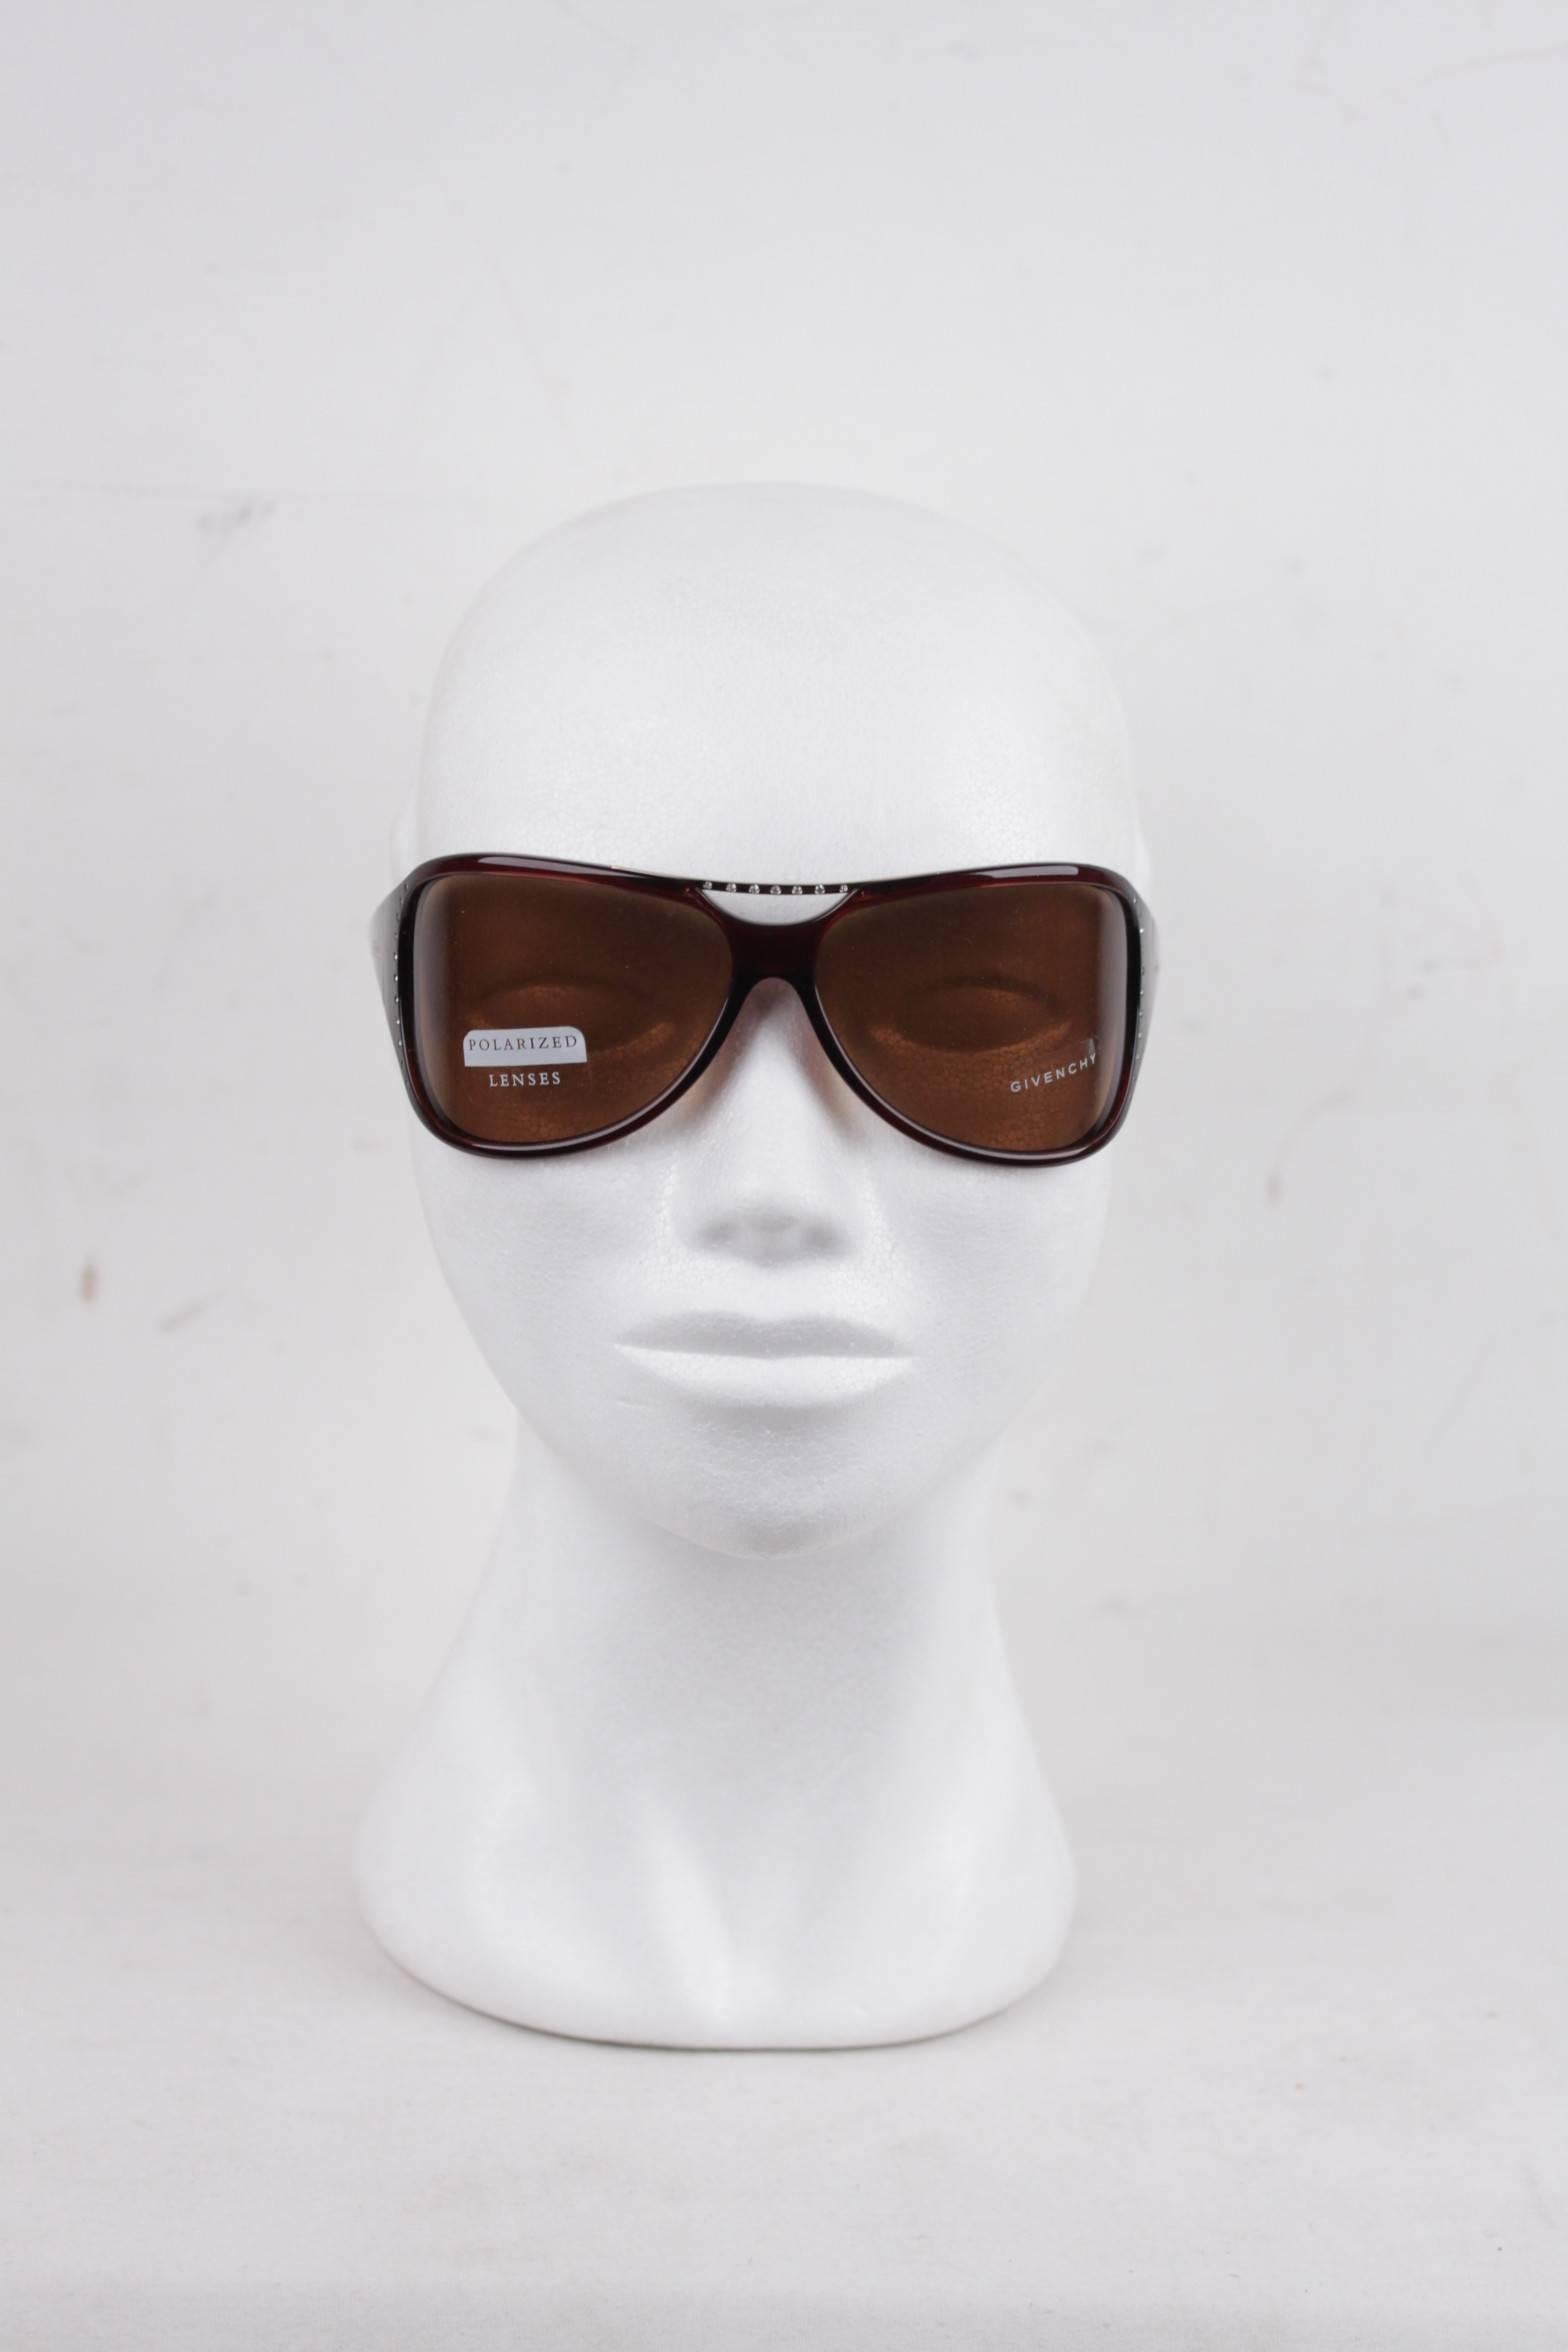 Brown GIVENCHY wrap POLARIZED sunglasses SGV569S col.Z90 brown WOMENS MINT eyewear